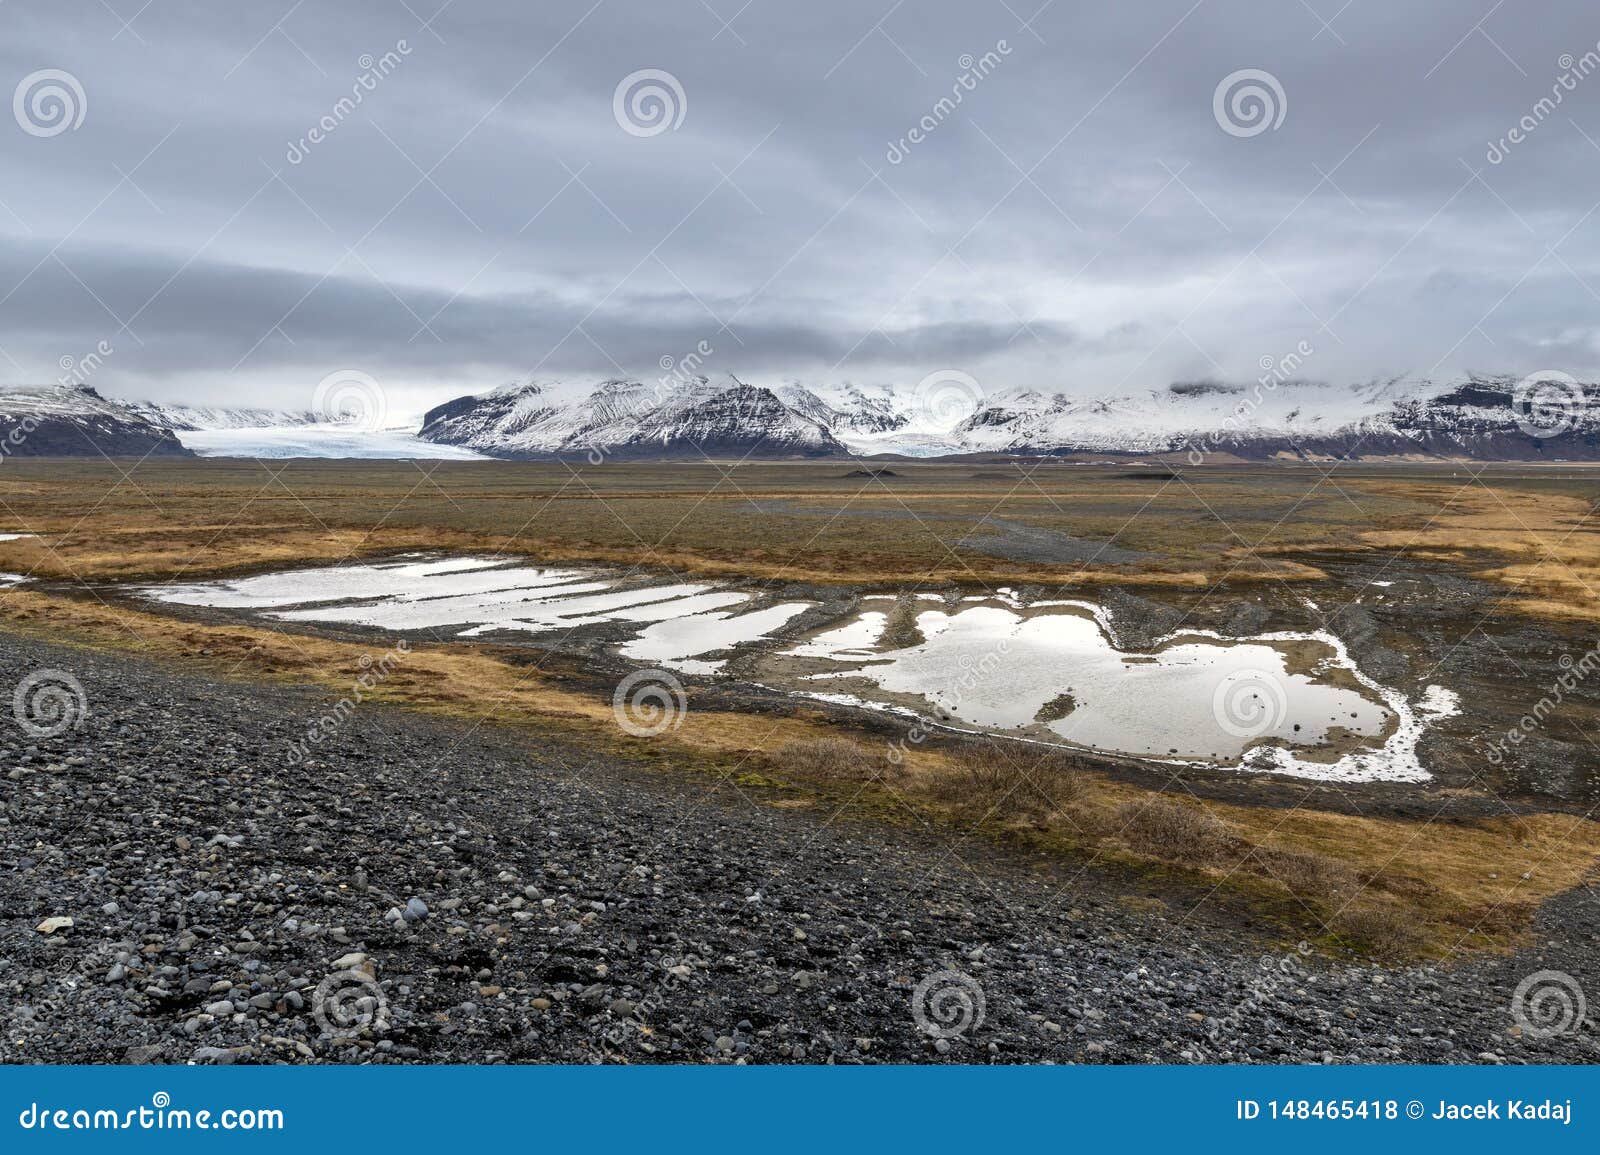 Iceland Countryside Winter Landscape Stock Photo - Image of circle ...